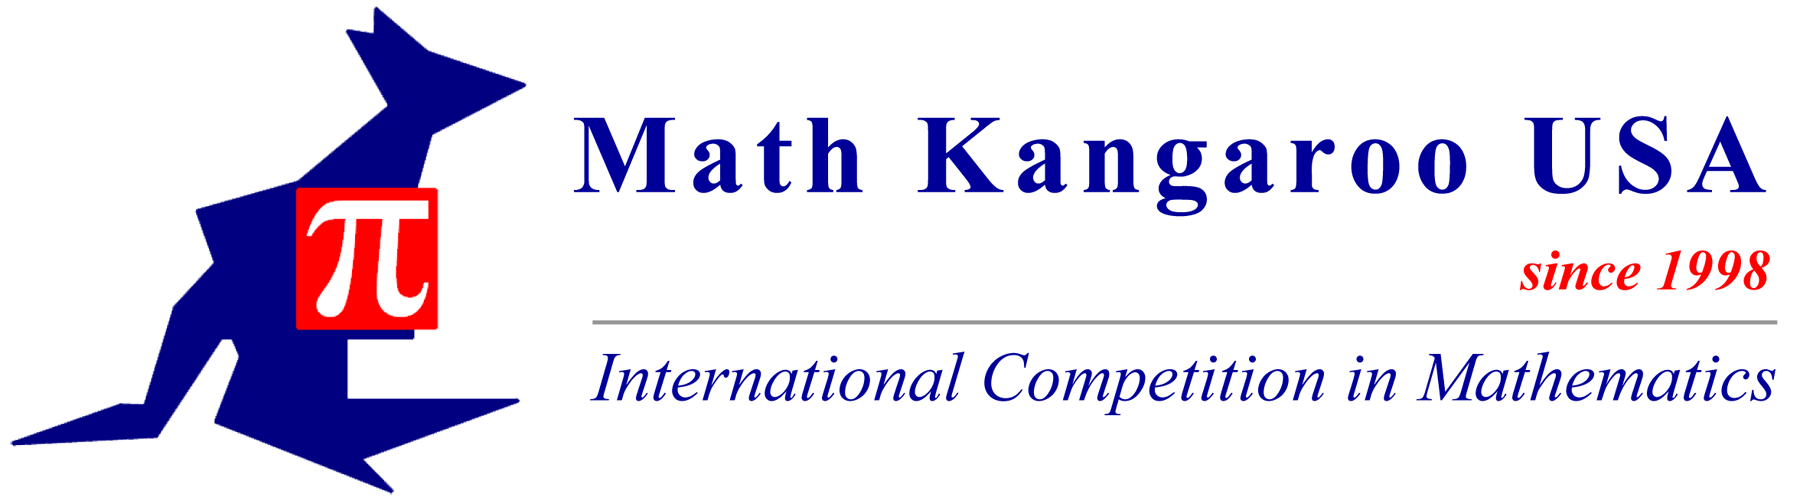 Kangaroo math competition 2021 results